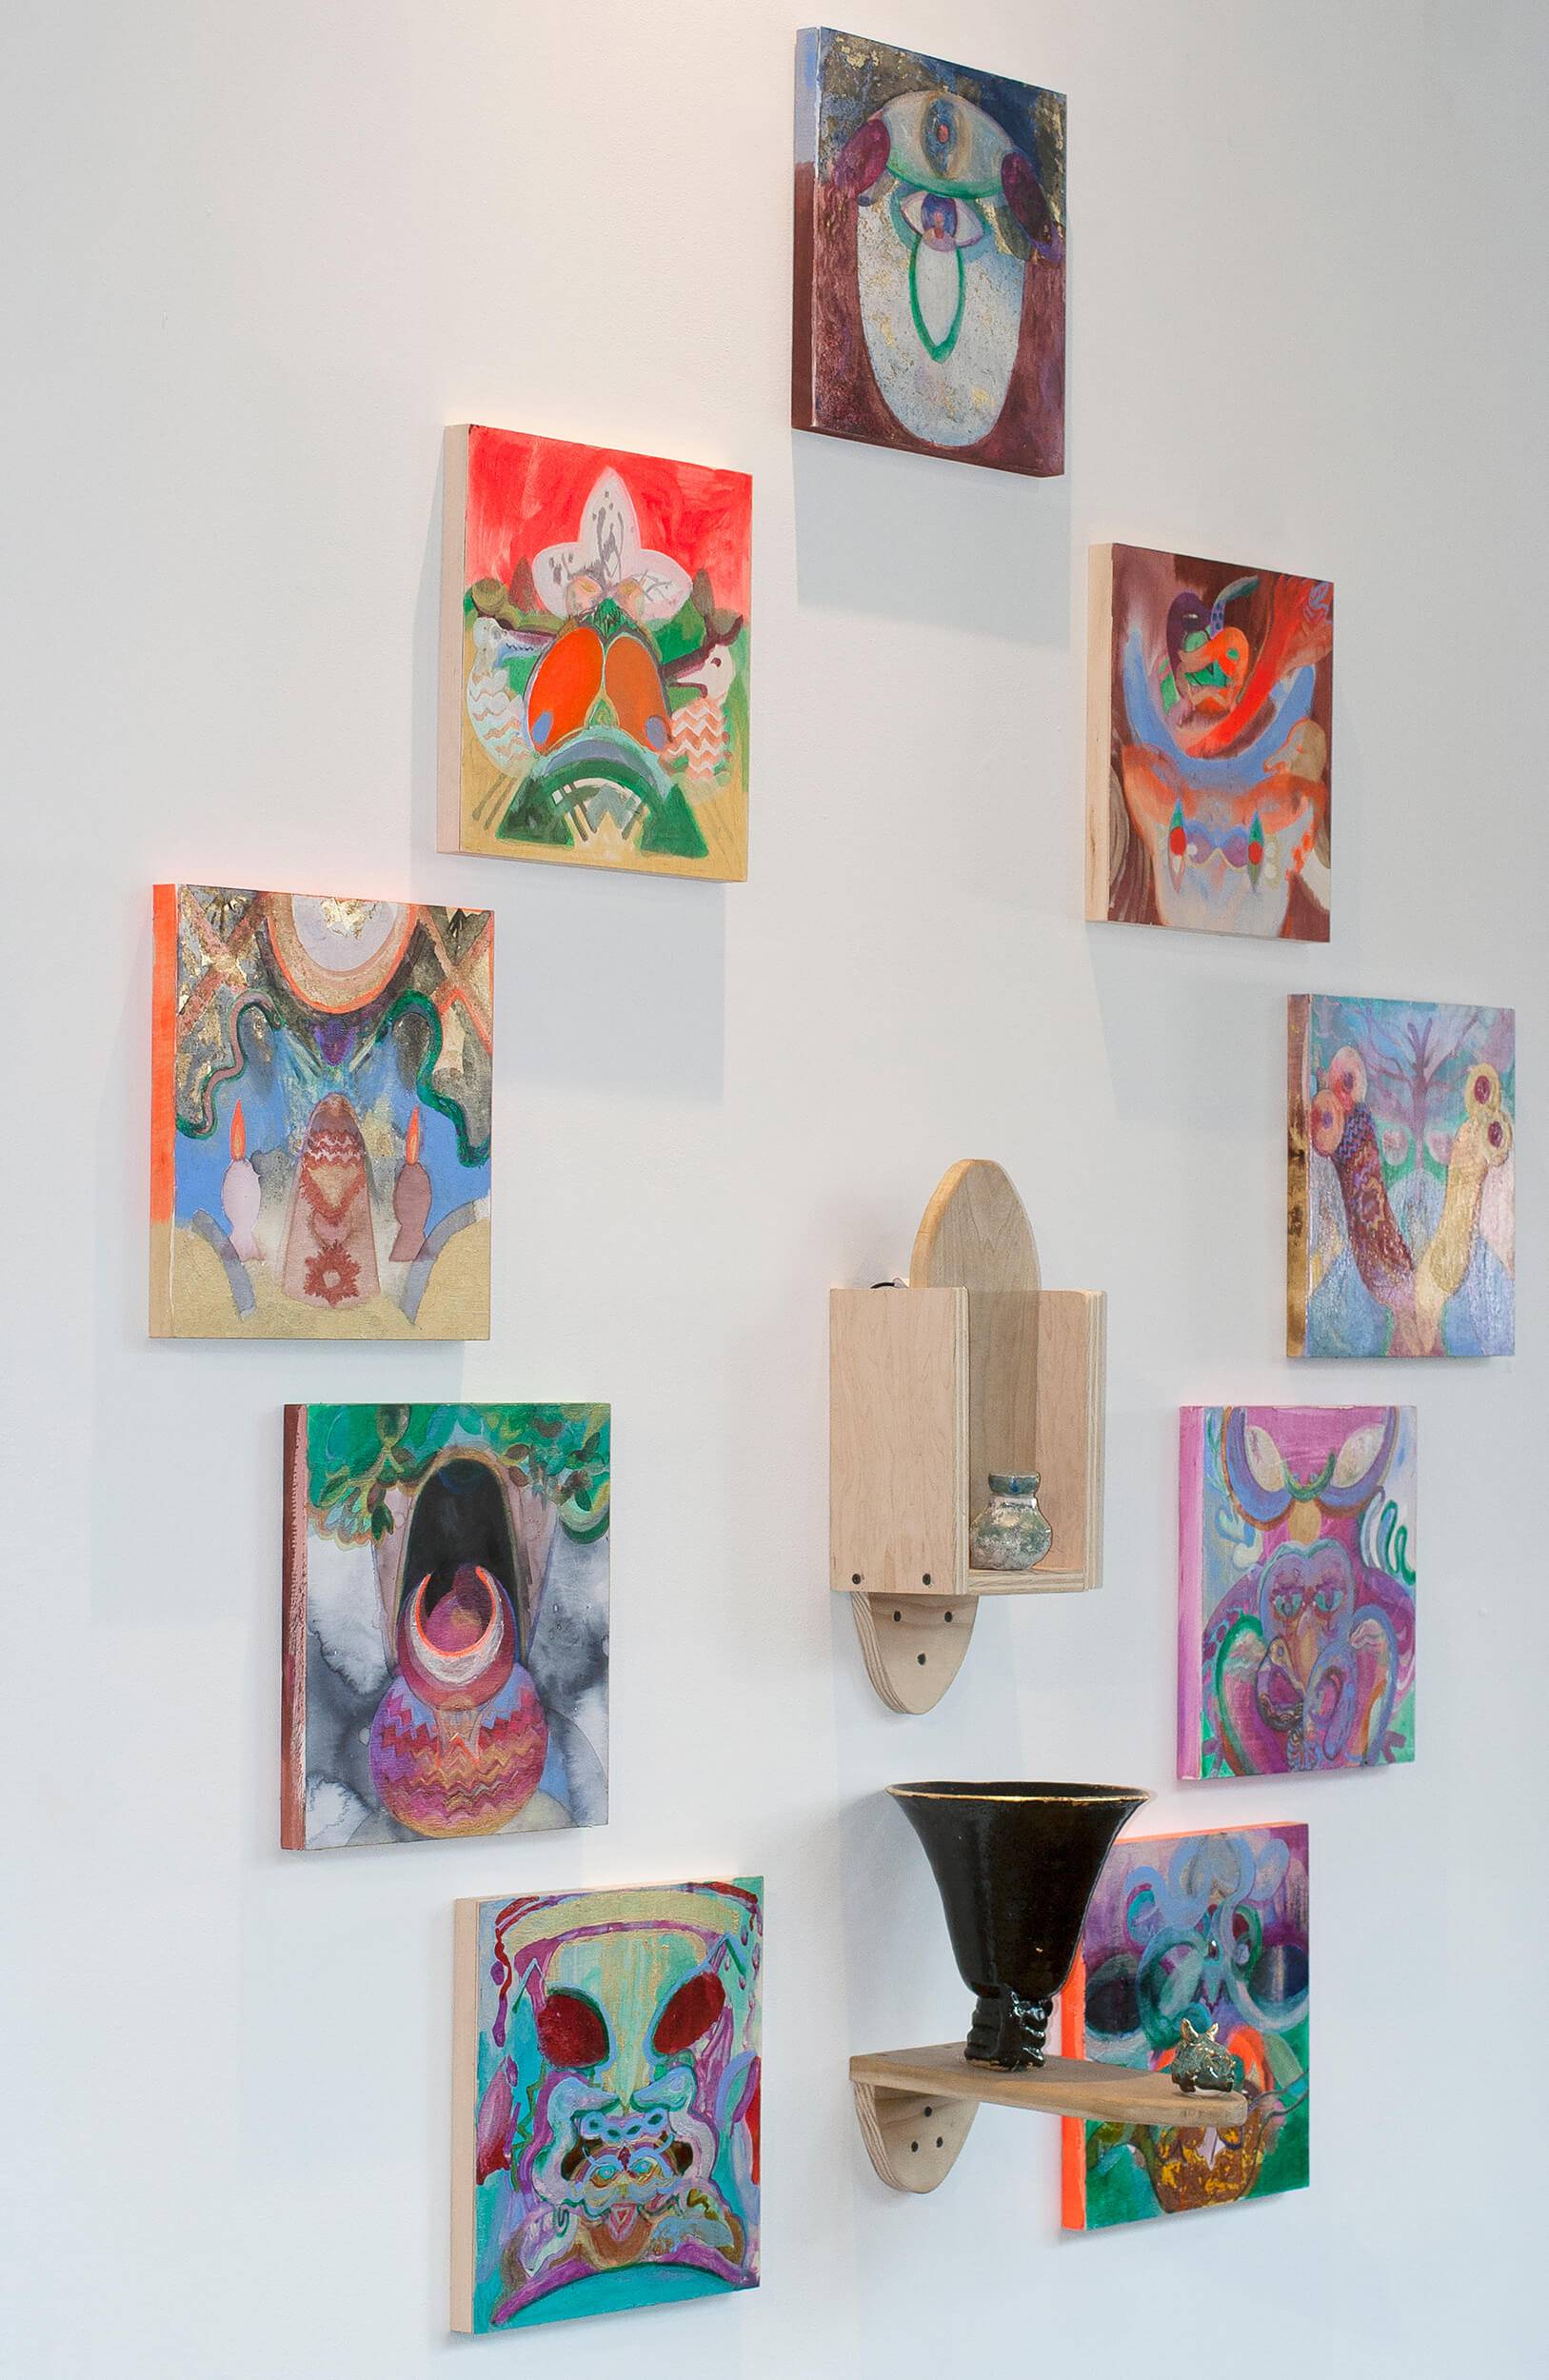 Elizabeth Insogna Art - "Image Circle + Projection in Vessel"